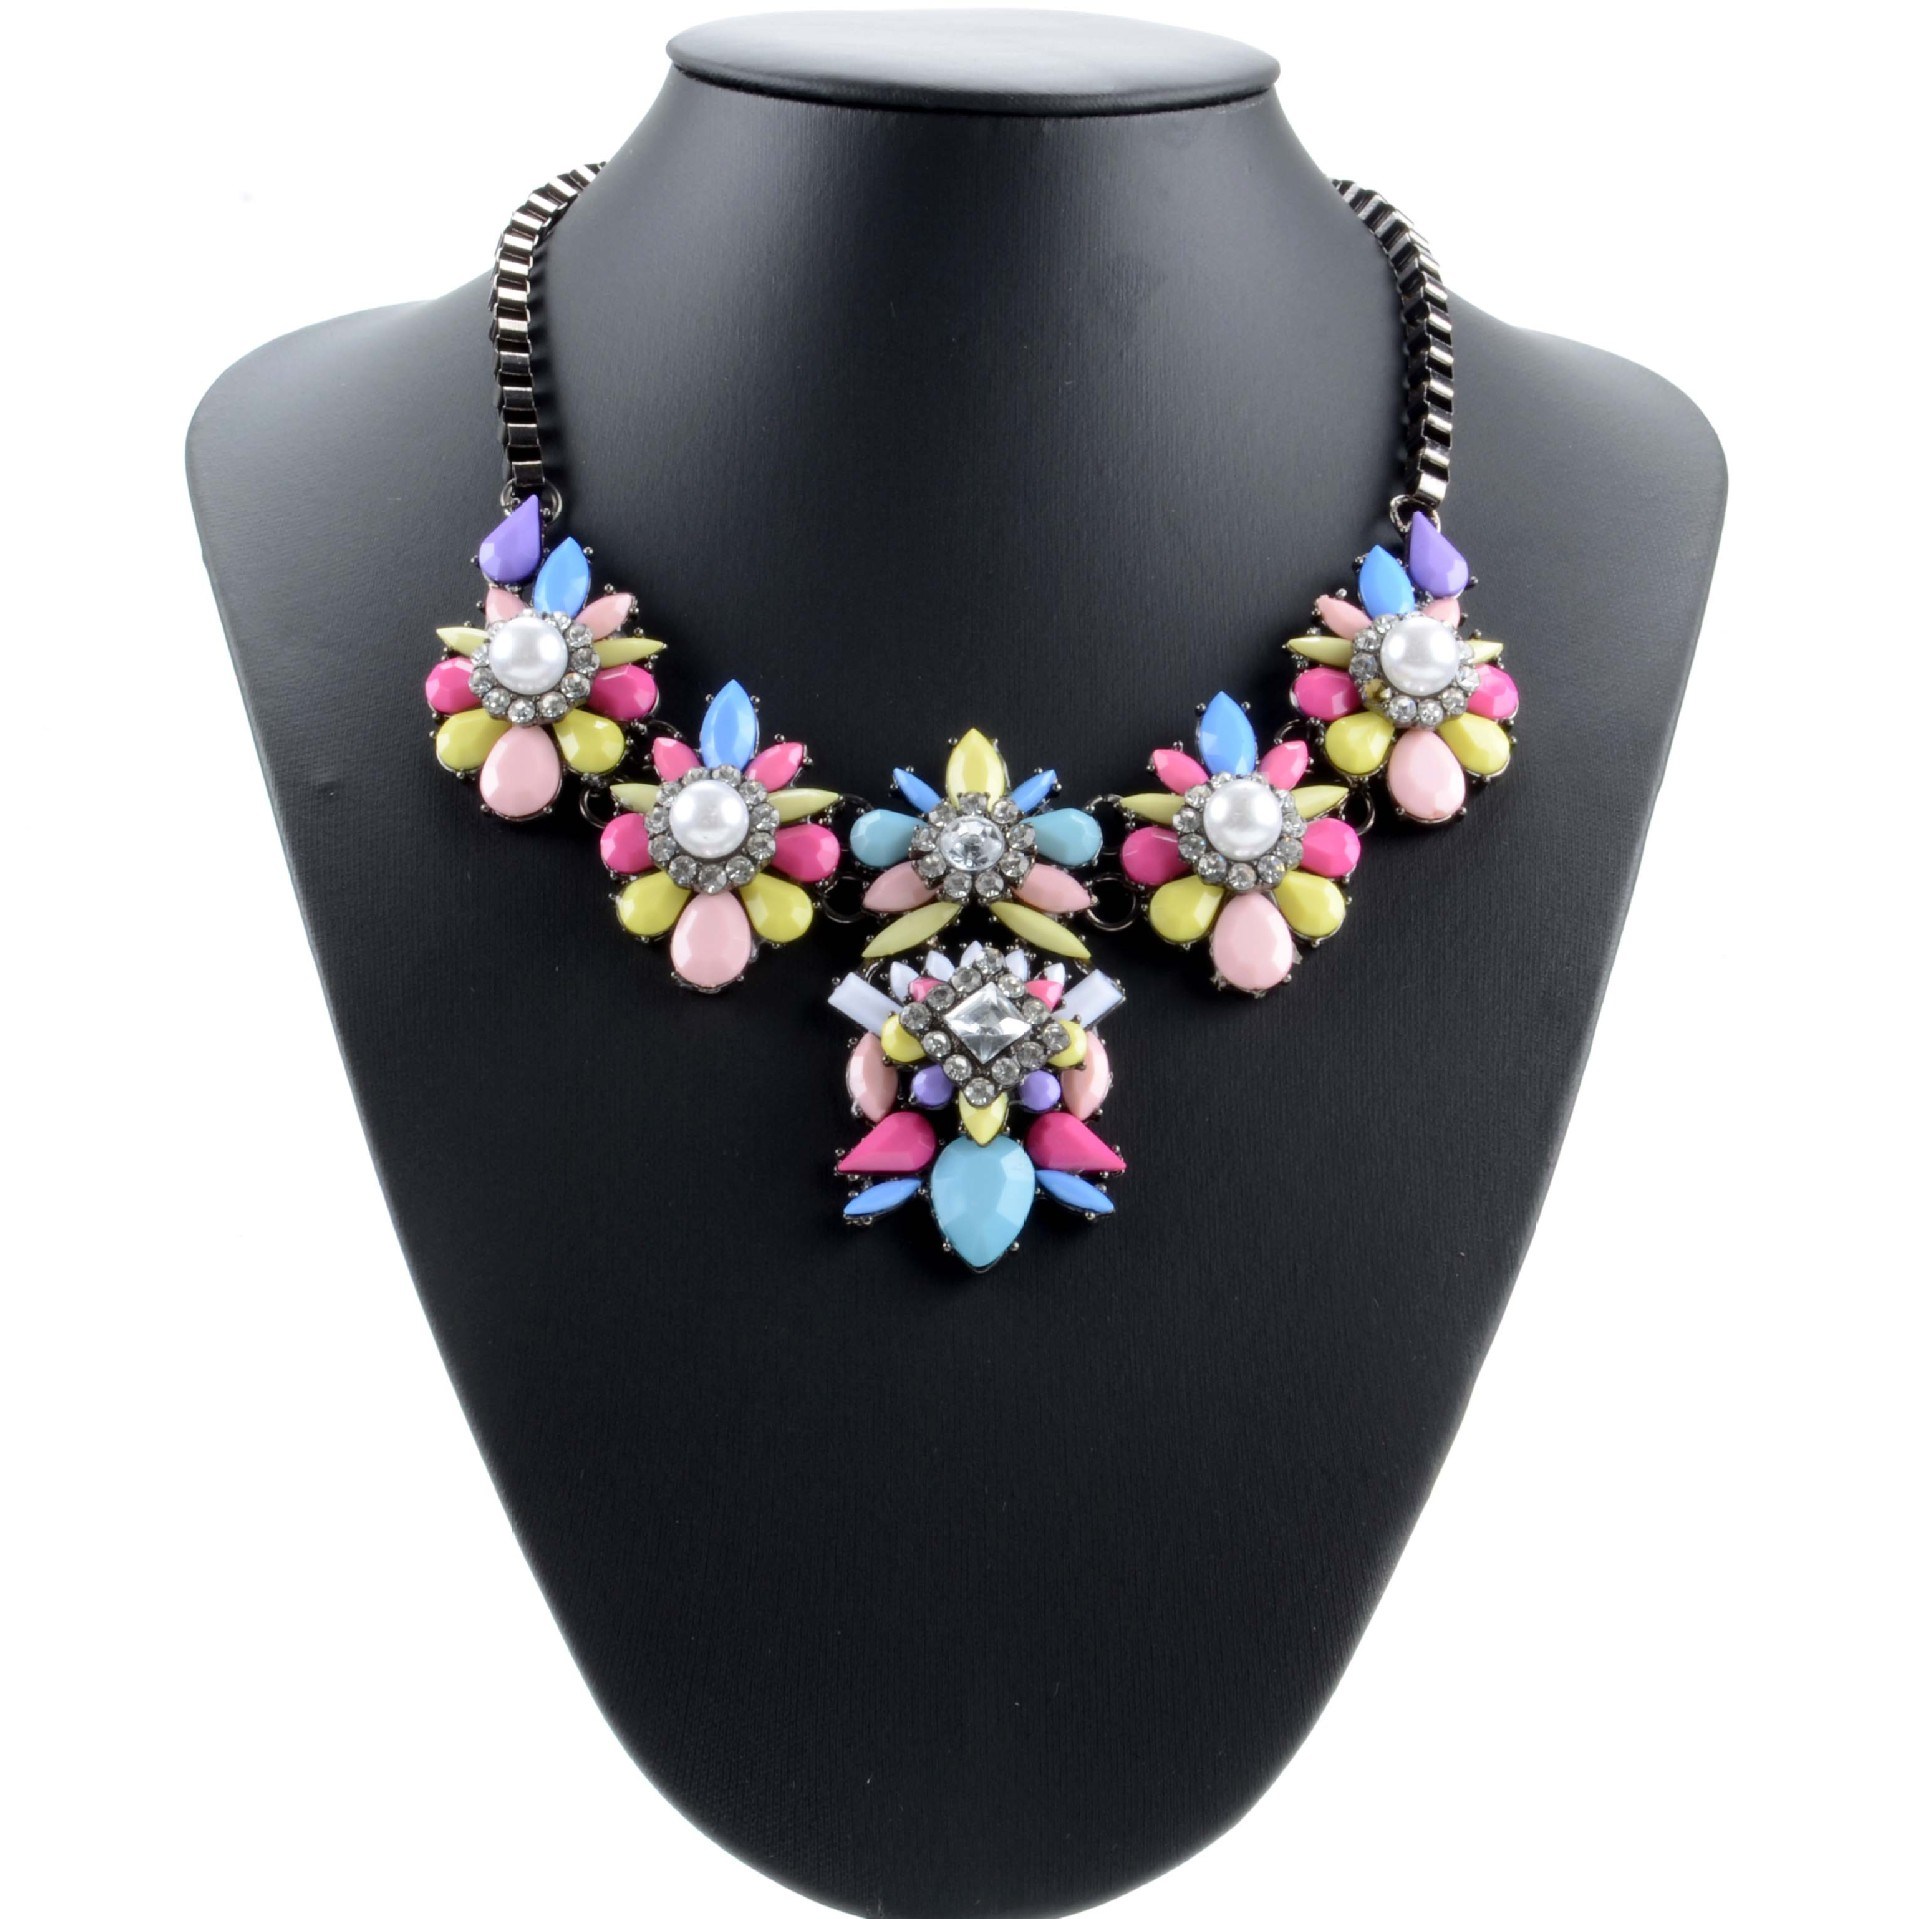 Wholesale Fashion Shourouk Choker Necklace, Crystal Chunky Statement Necklace